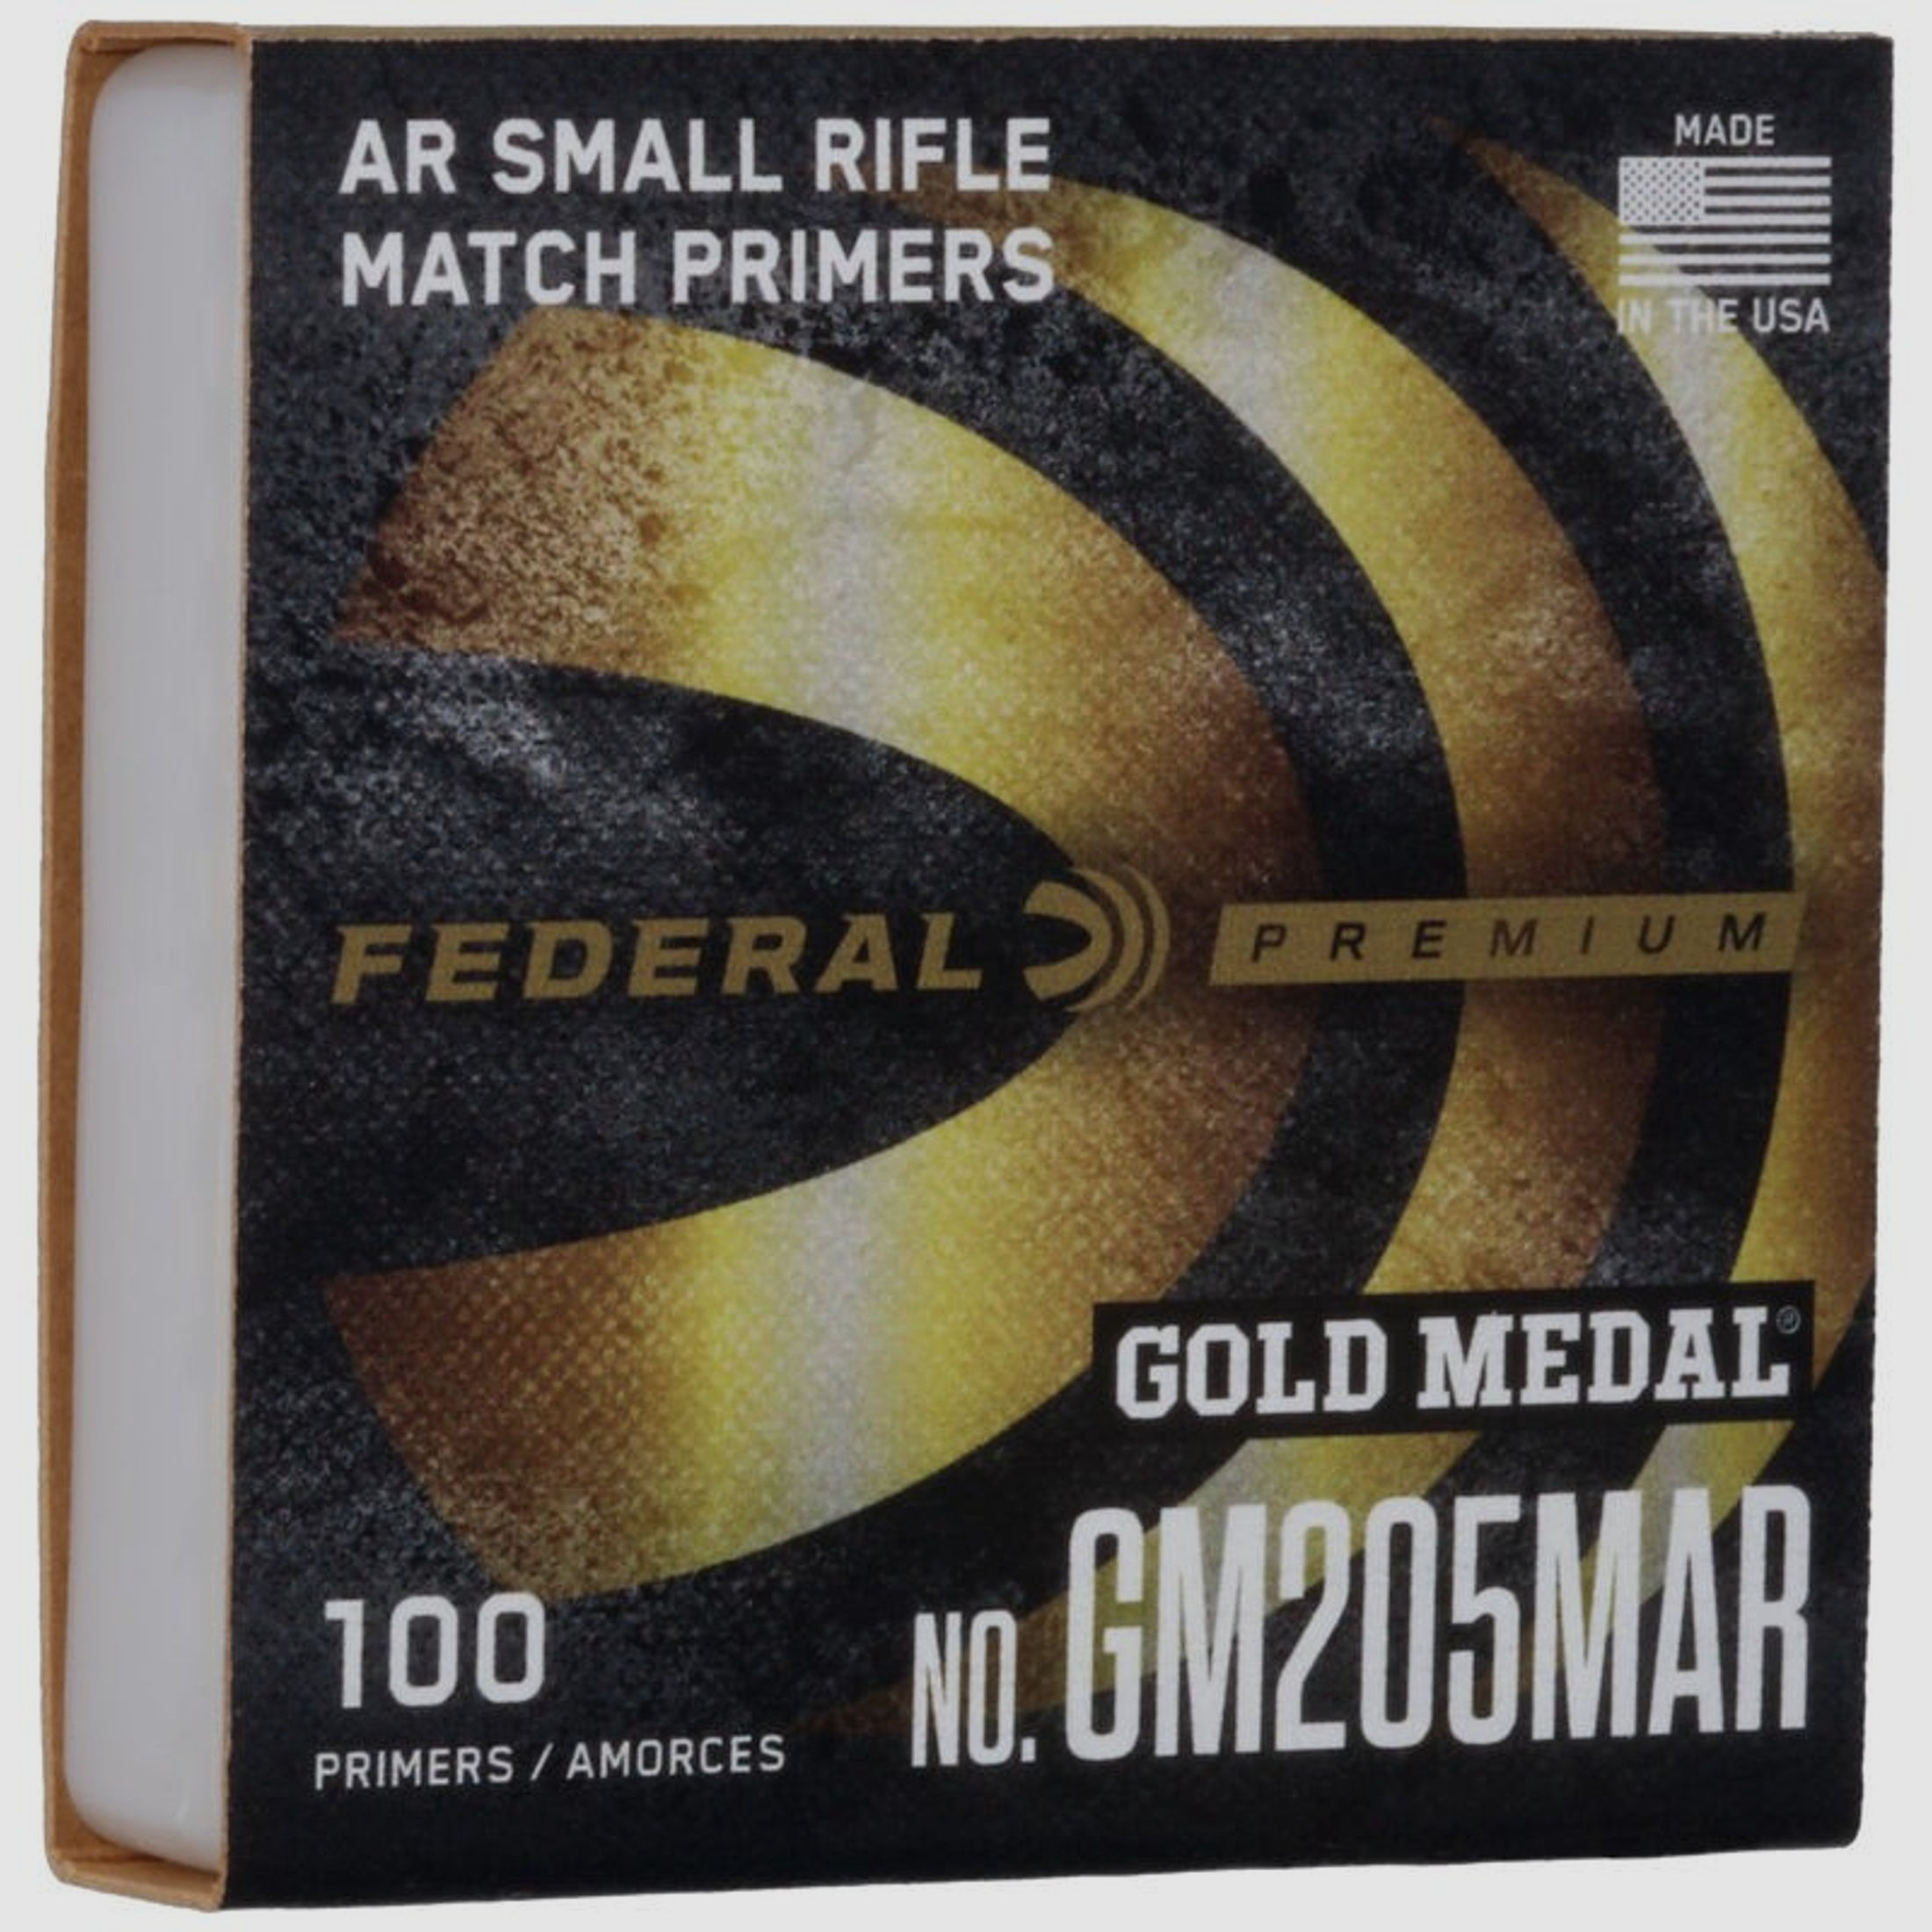 FEDERAL #GM205MAR Gold Medal AR Zündhütchen .205 Small